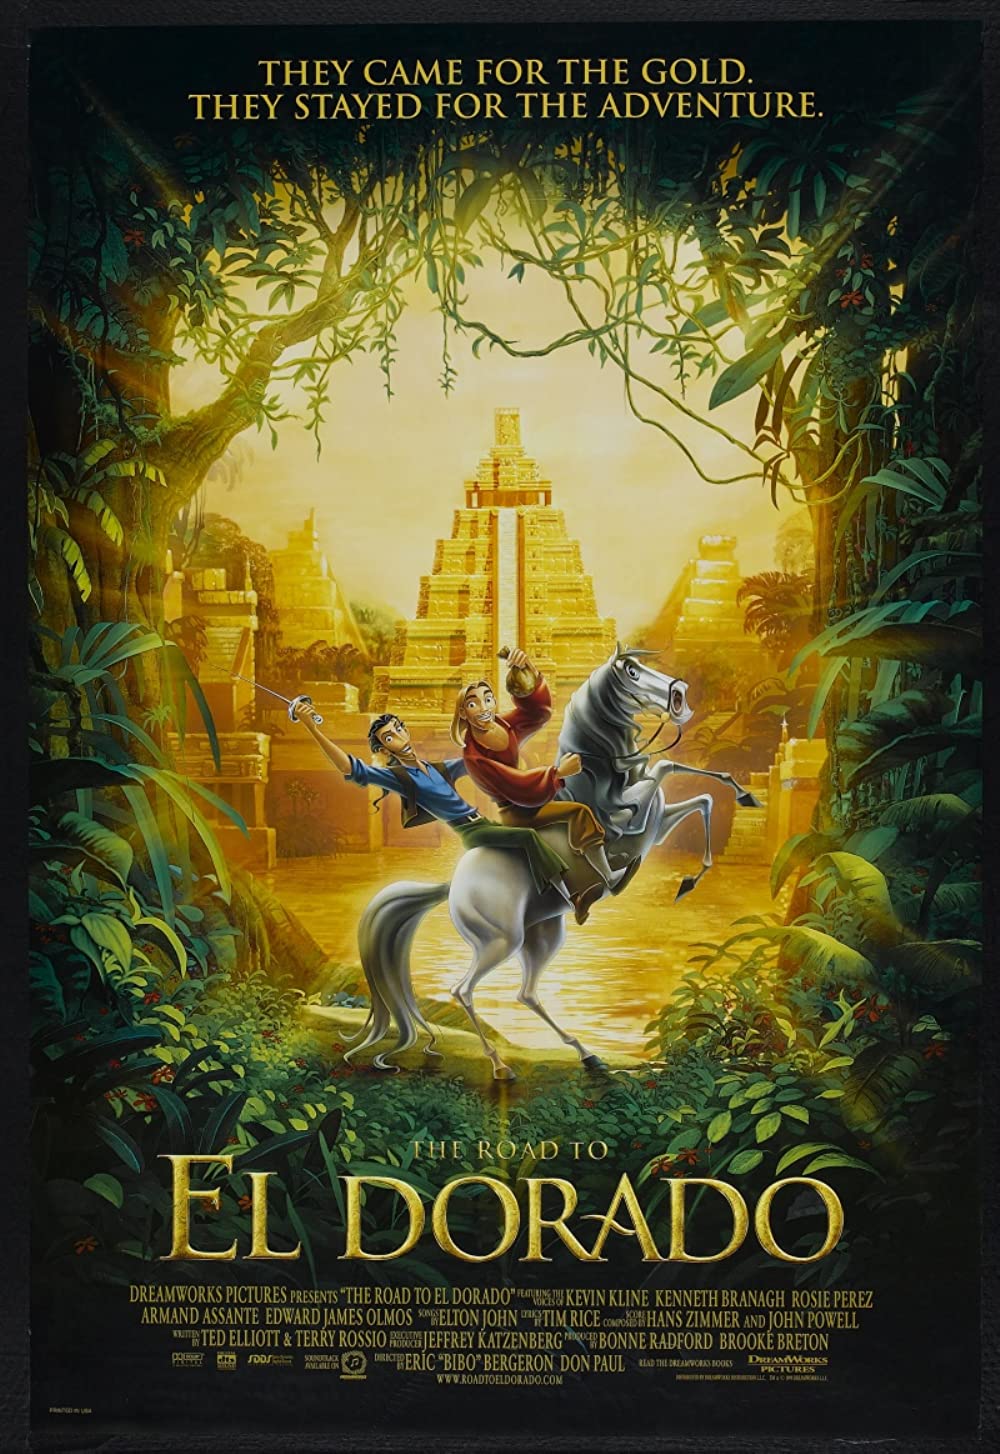 Filmbeschreibung zu El Dorado